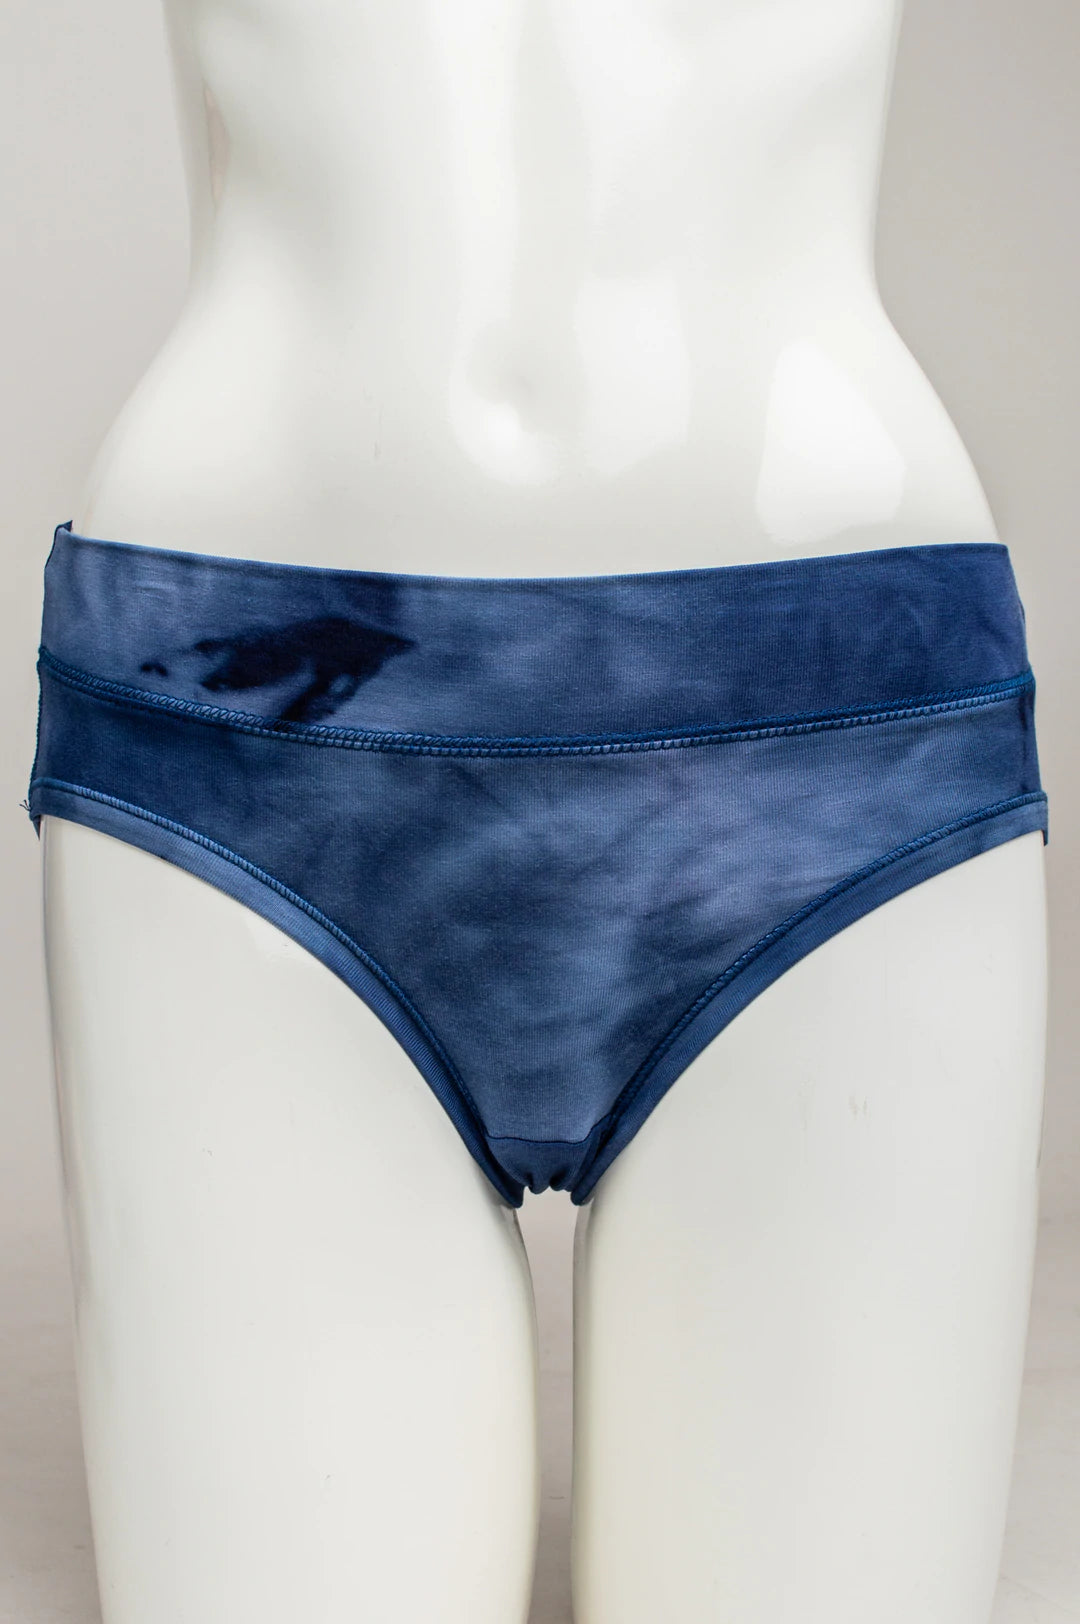 ▷ 6x Lingerie Soft Nylon Full Brief Panties Women Underwear Size